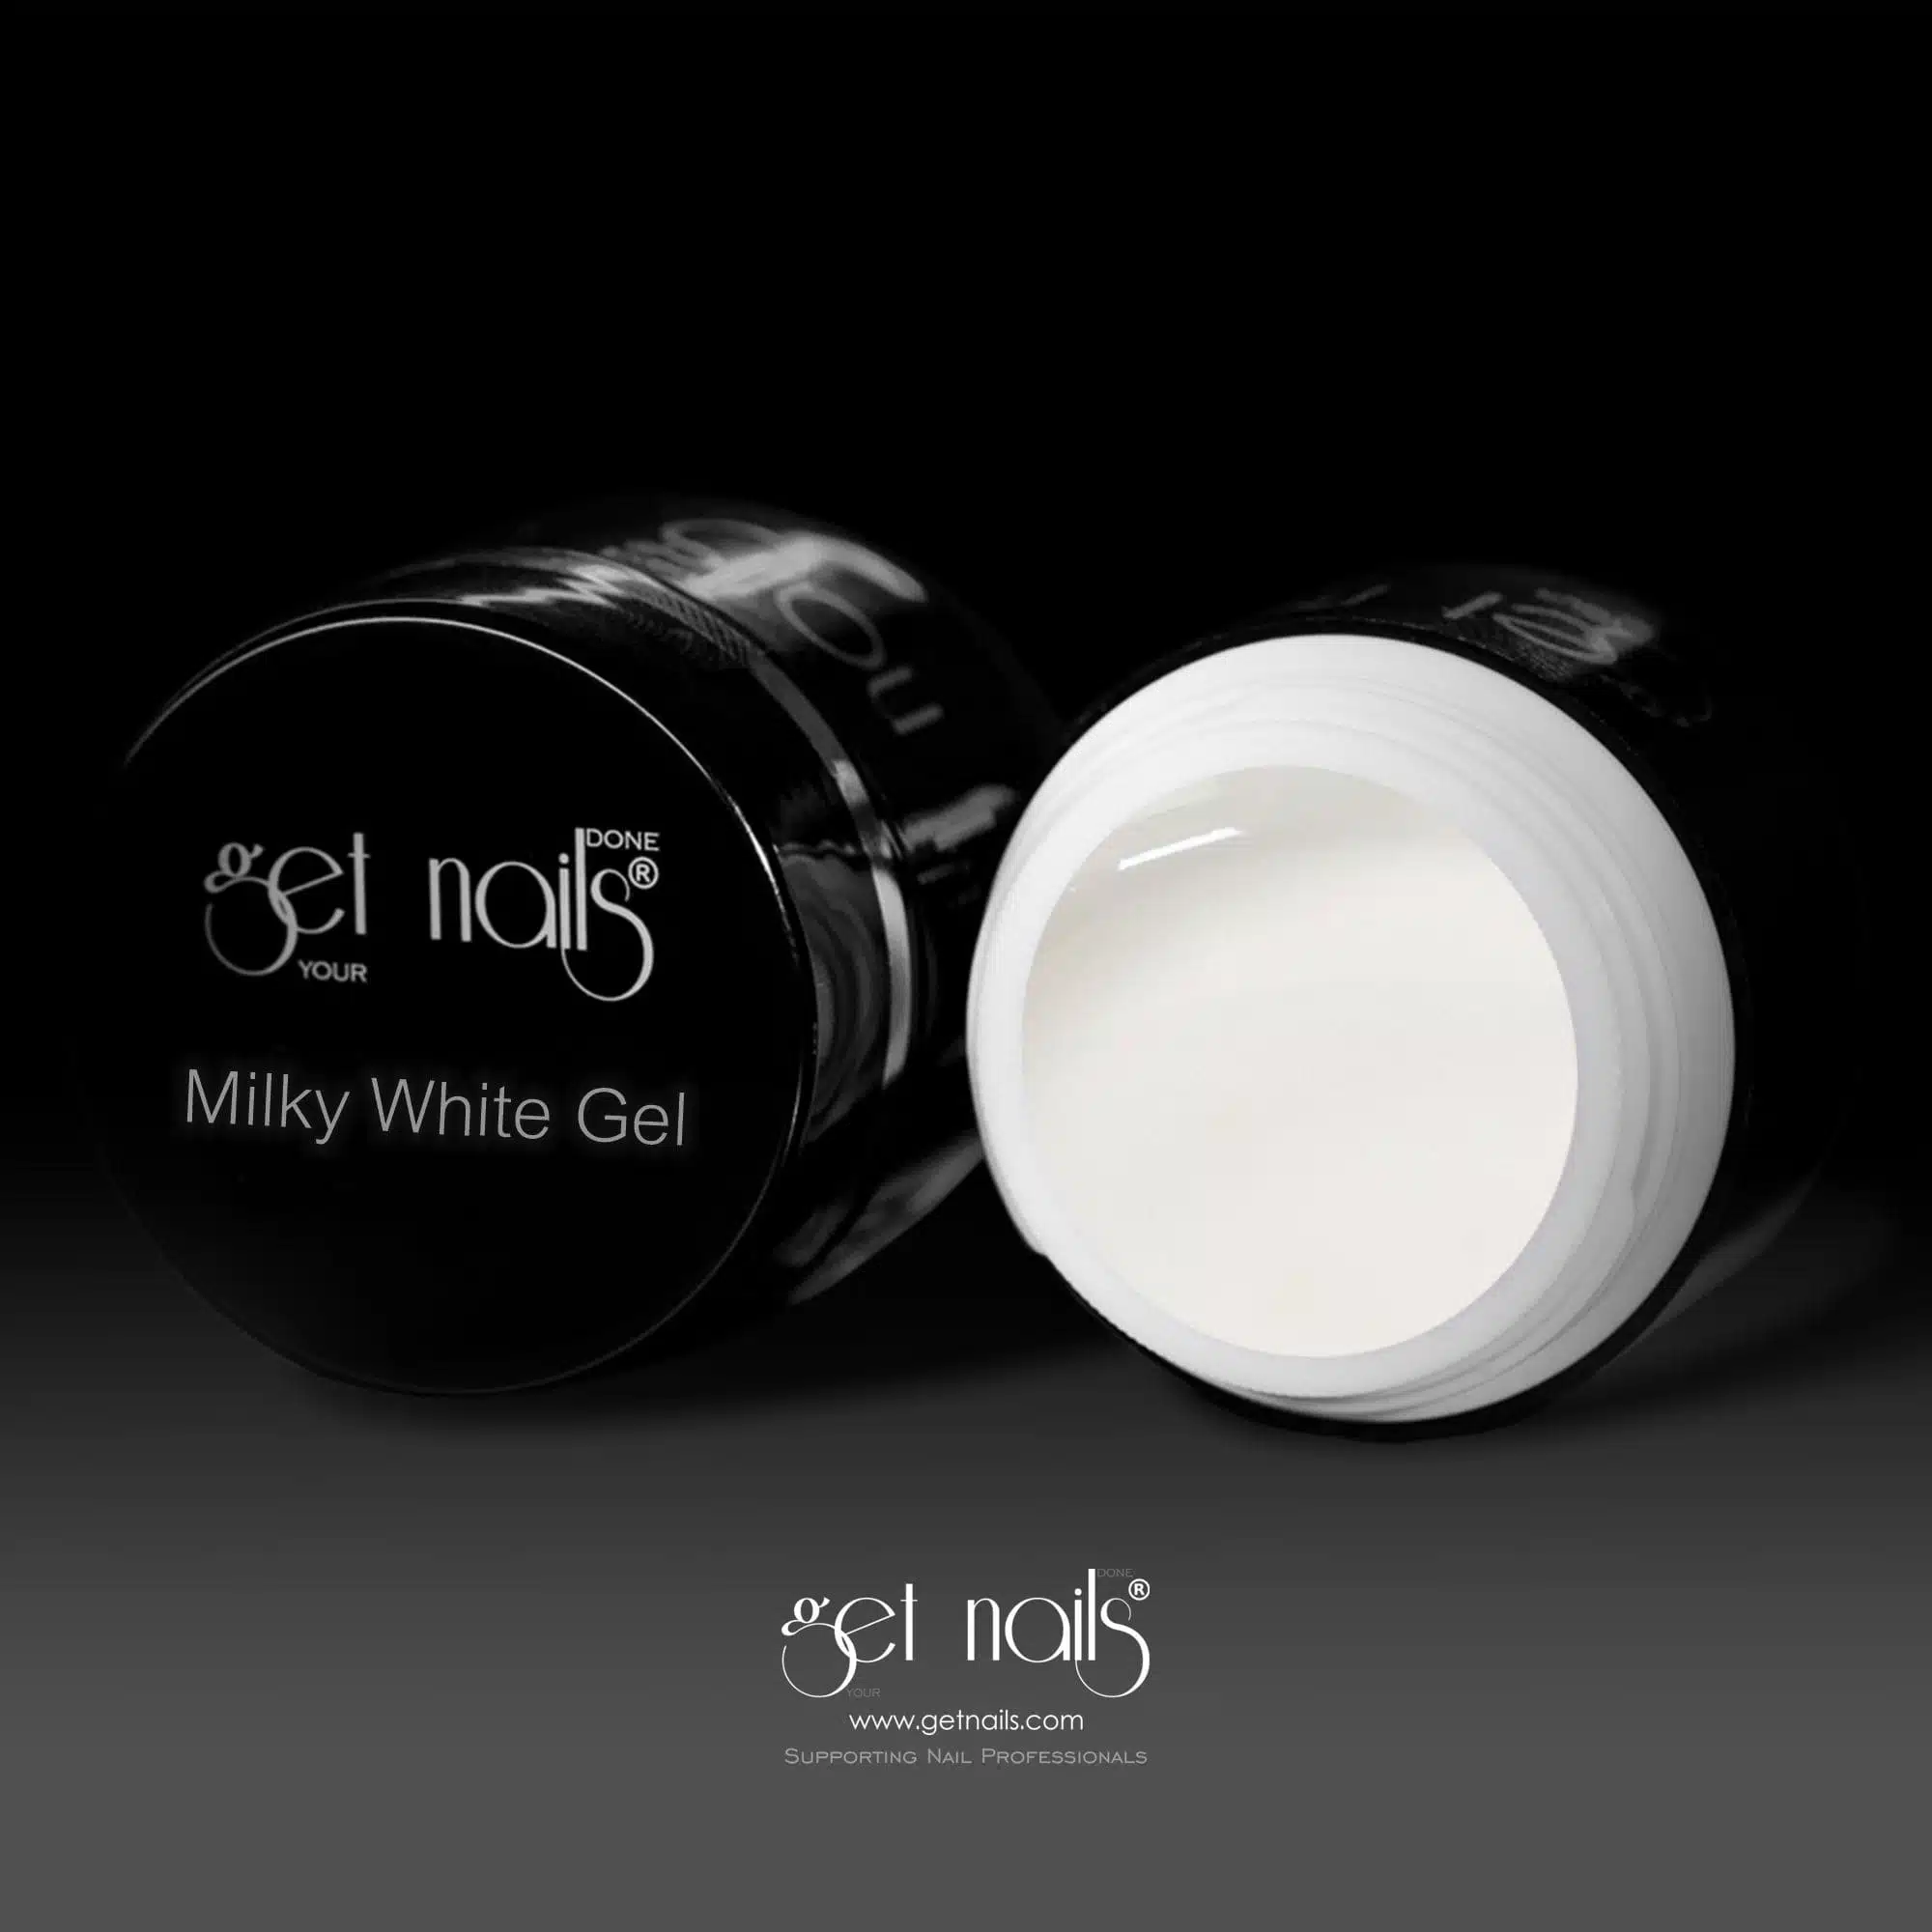 Get Nails Austria - Milky White Gel Sample